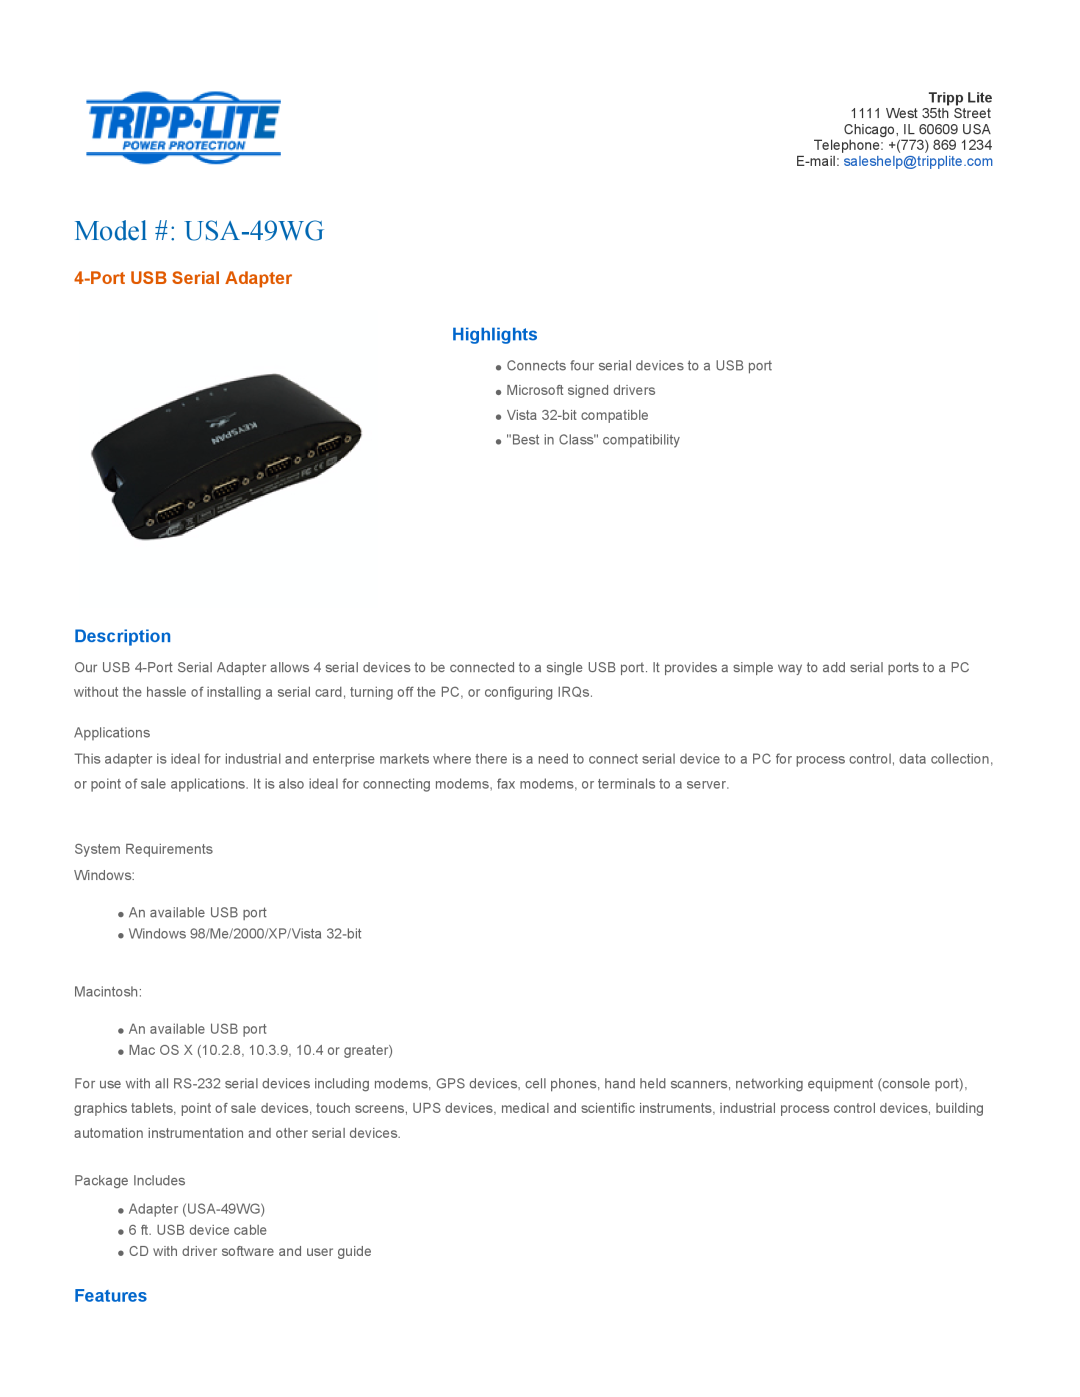 Tripp Lite manual Highlights, Description, Features, Model # USA-49WG, Port USB Serial Adapter 